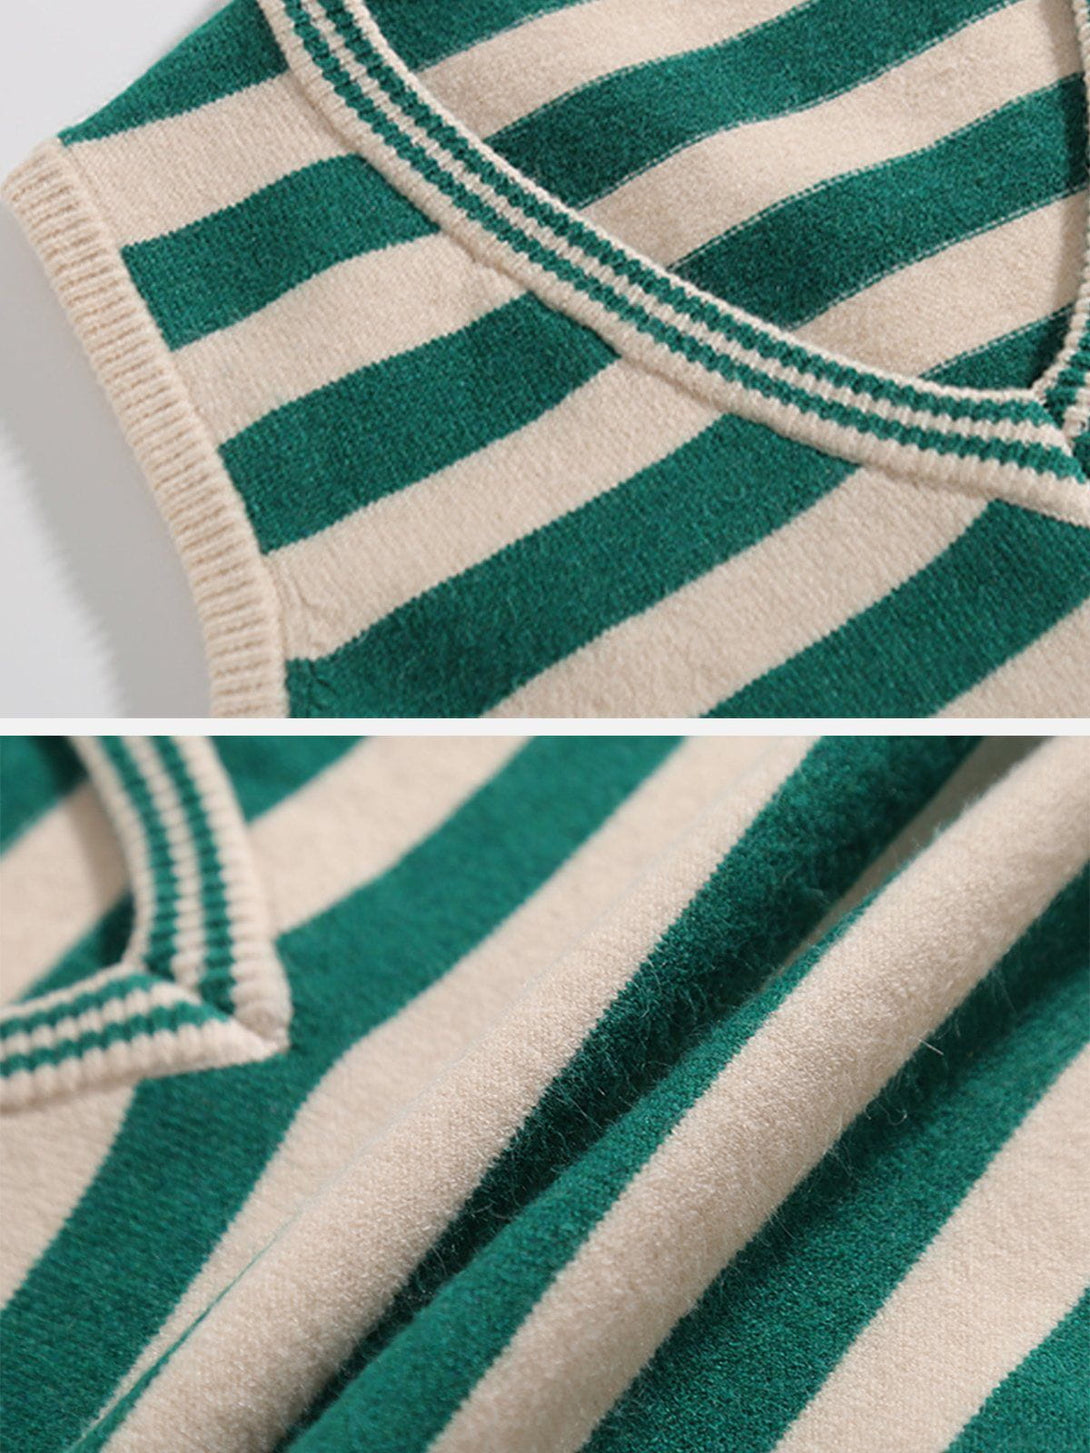 Levefly - Striped Color Blocking Sweater Vest - Streetwear Fashion - levefly.com